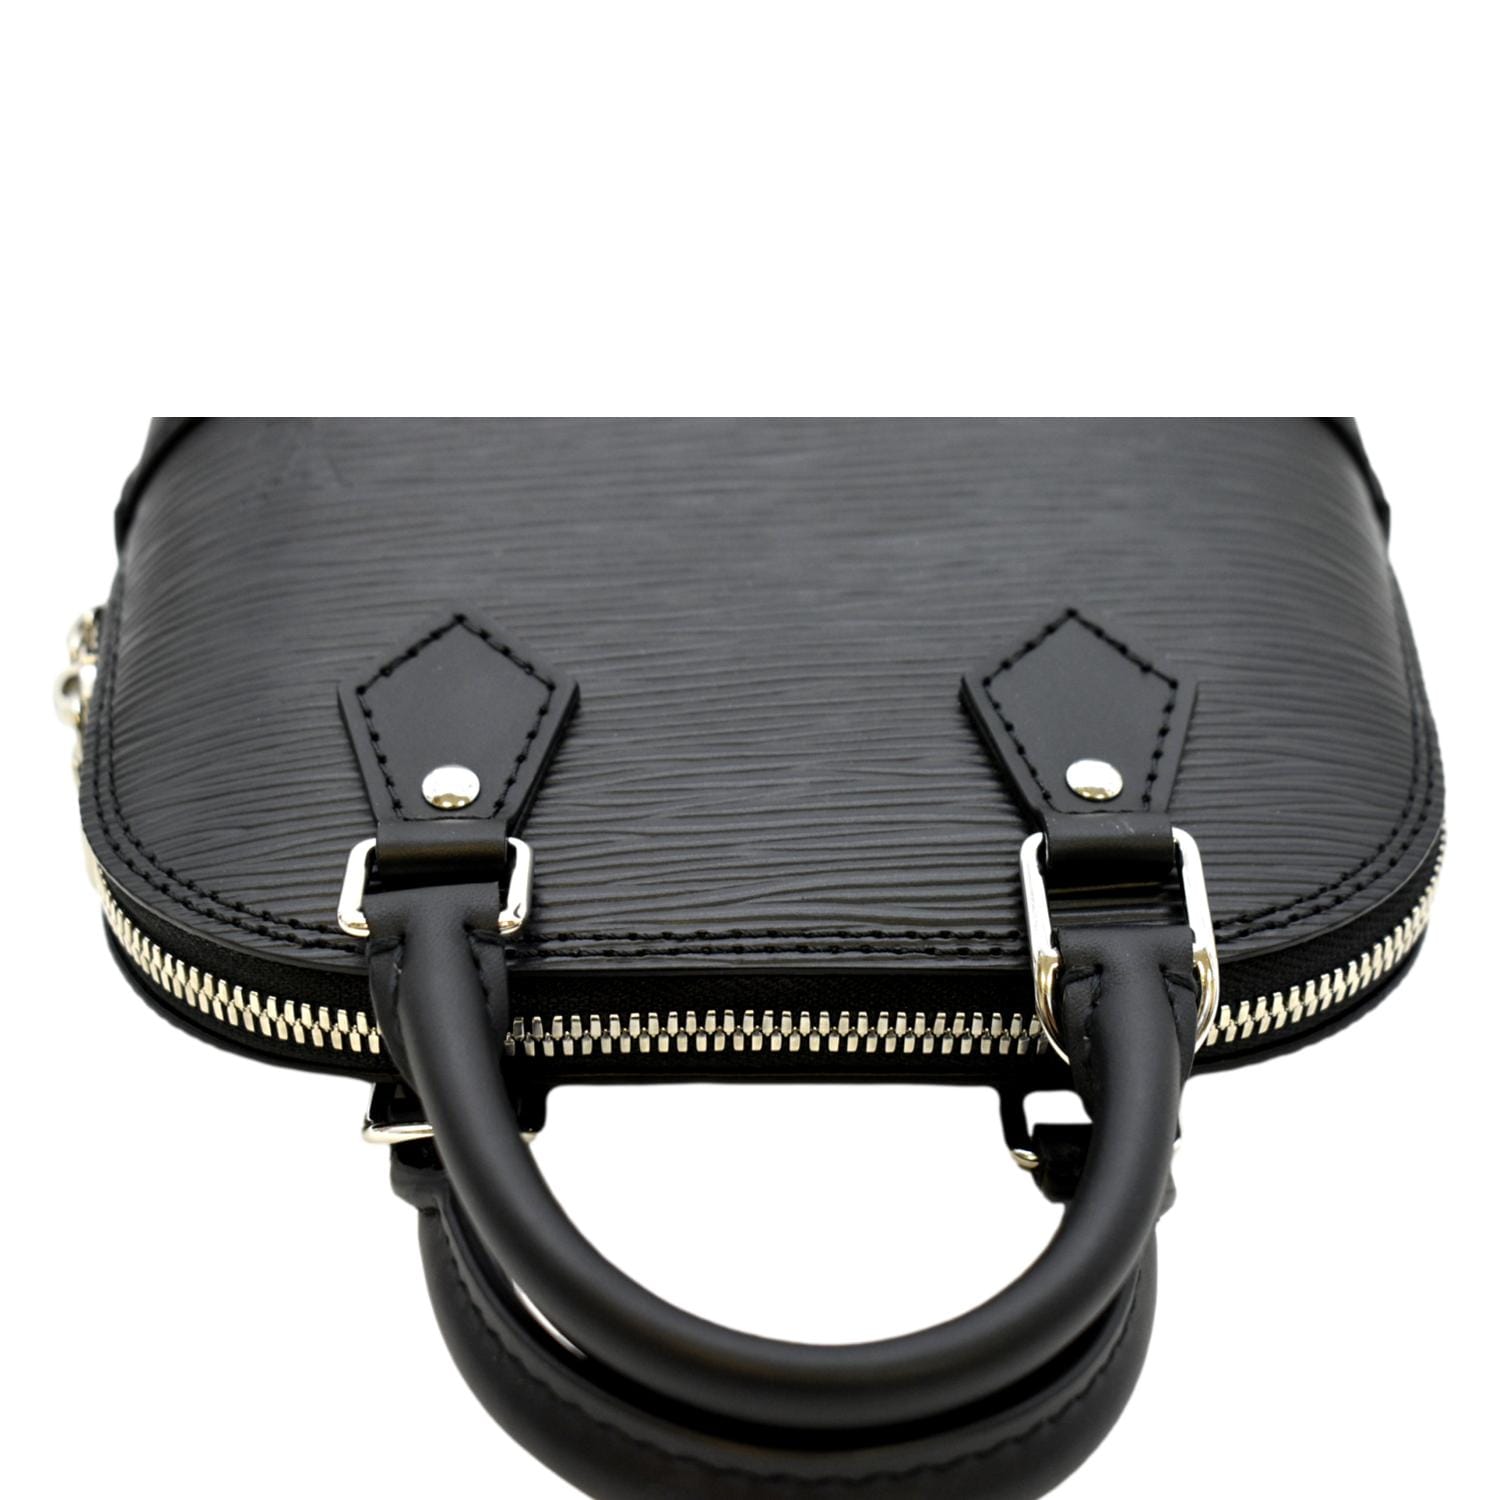 LOUIS VUITTON Nano Alma Epi Leather Top Handle Shoulder Bag Black